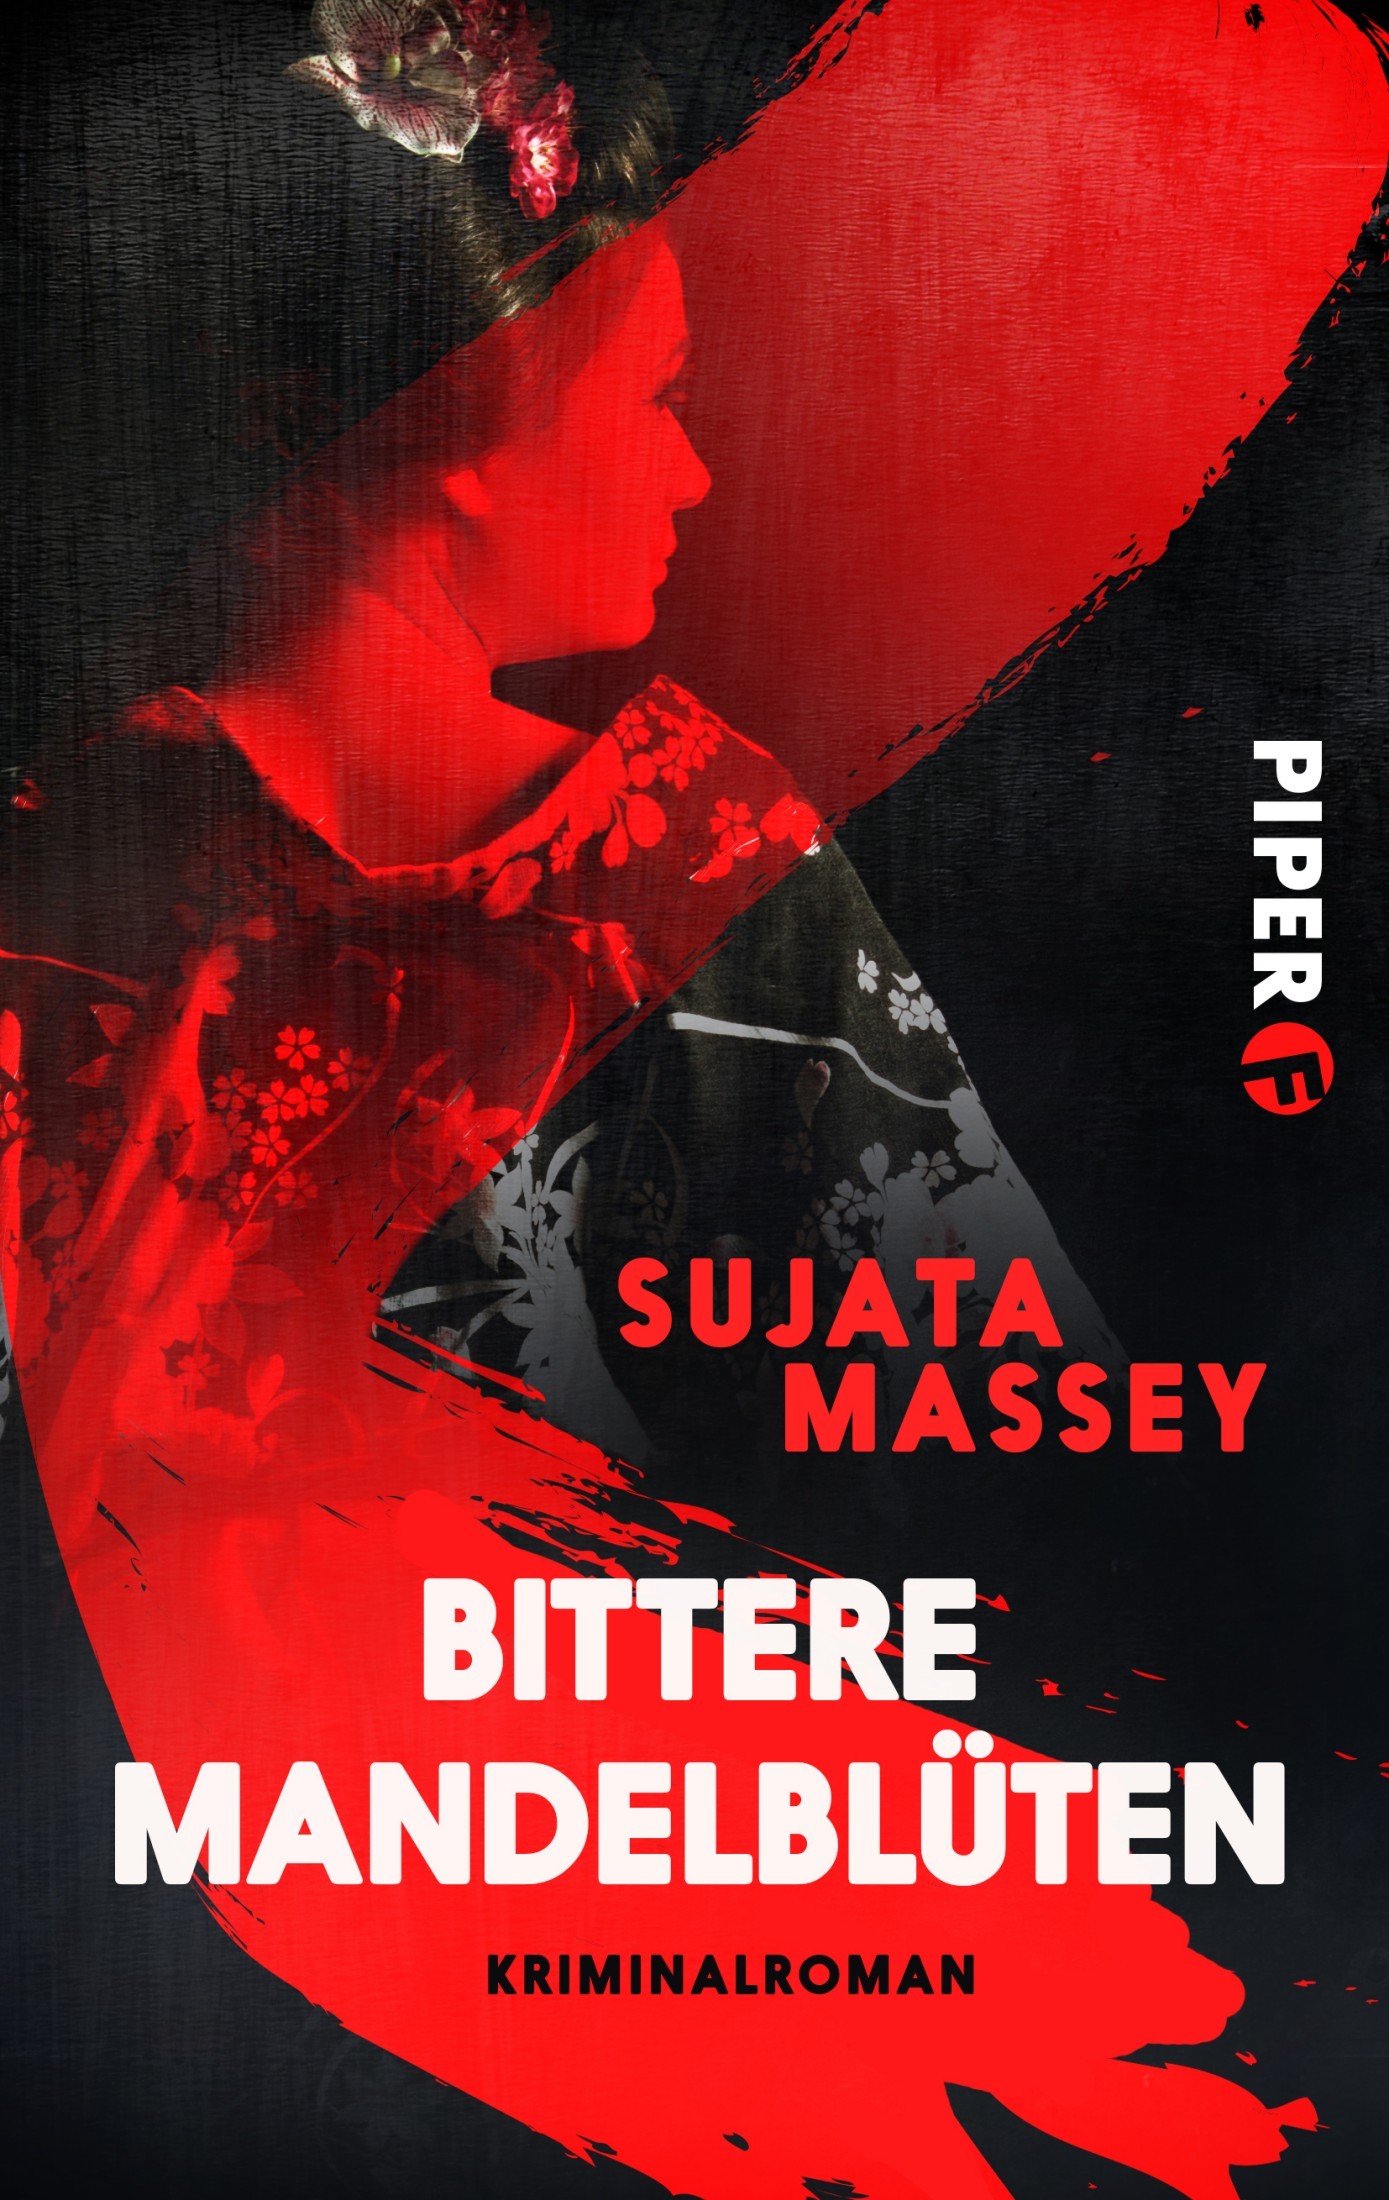 Titelbild zum Buch: Bittere Mandelblüten